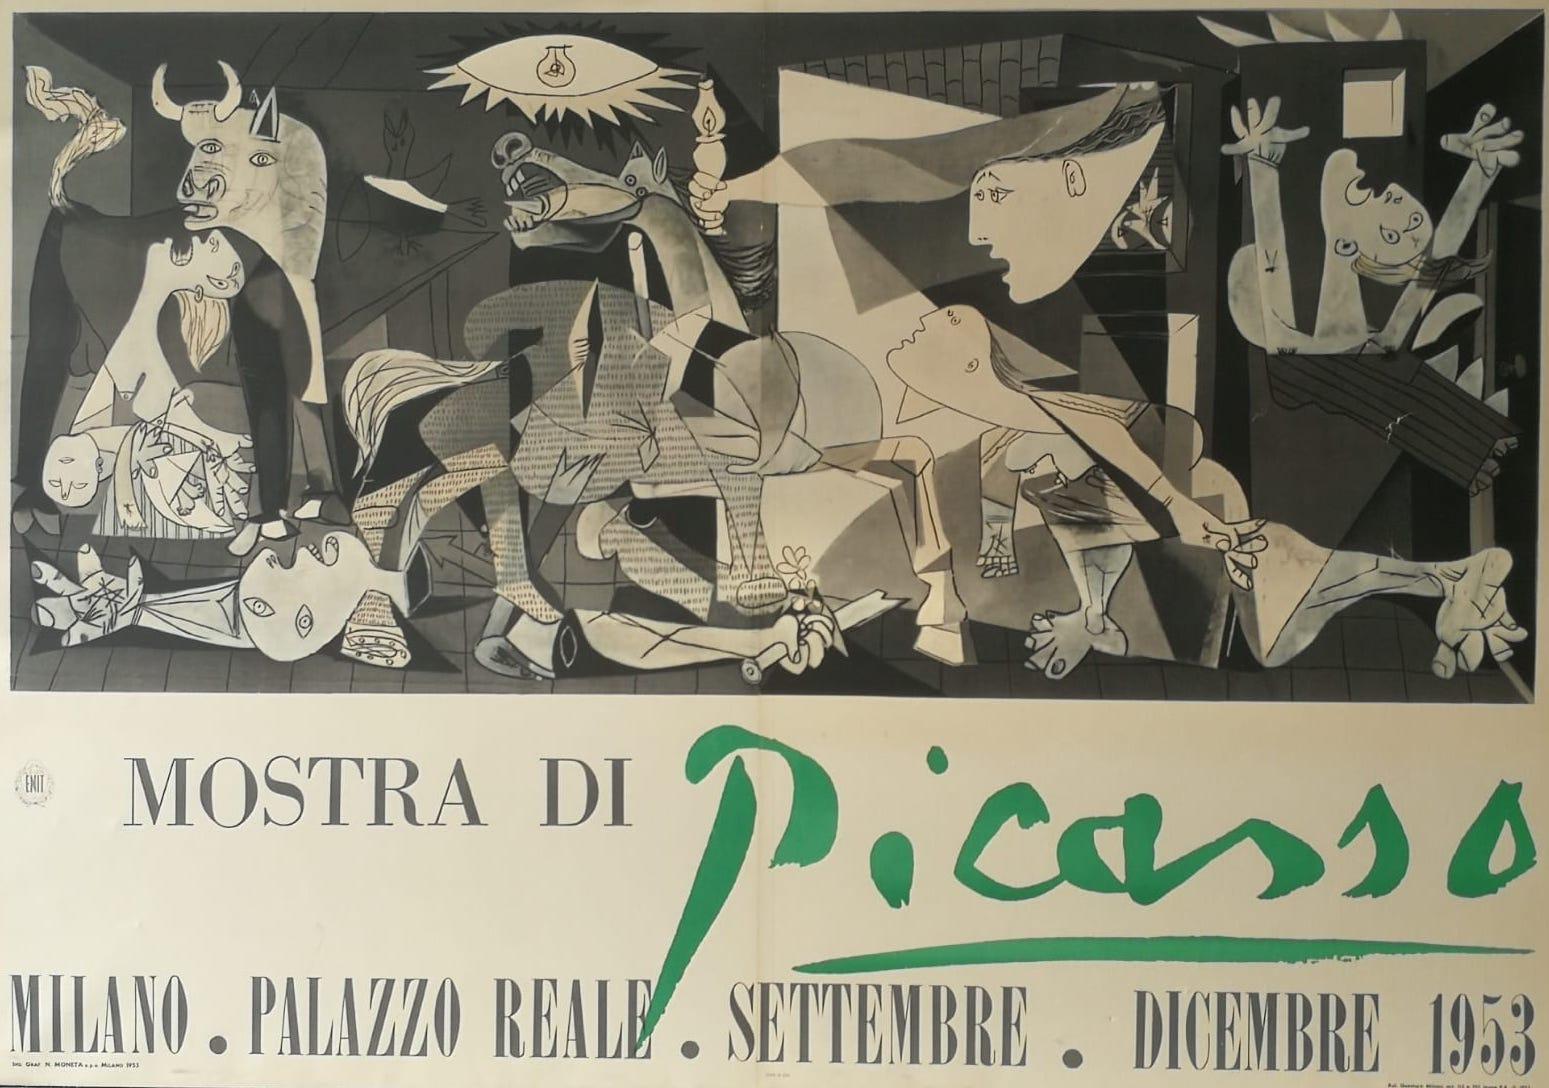 Pablo Picasso Print - Picasso Exhibition Poster, "Mostra di Picasso, " depicting Guernica - 1953